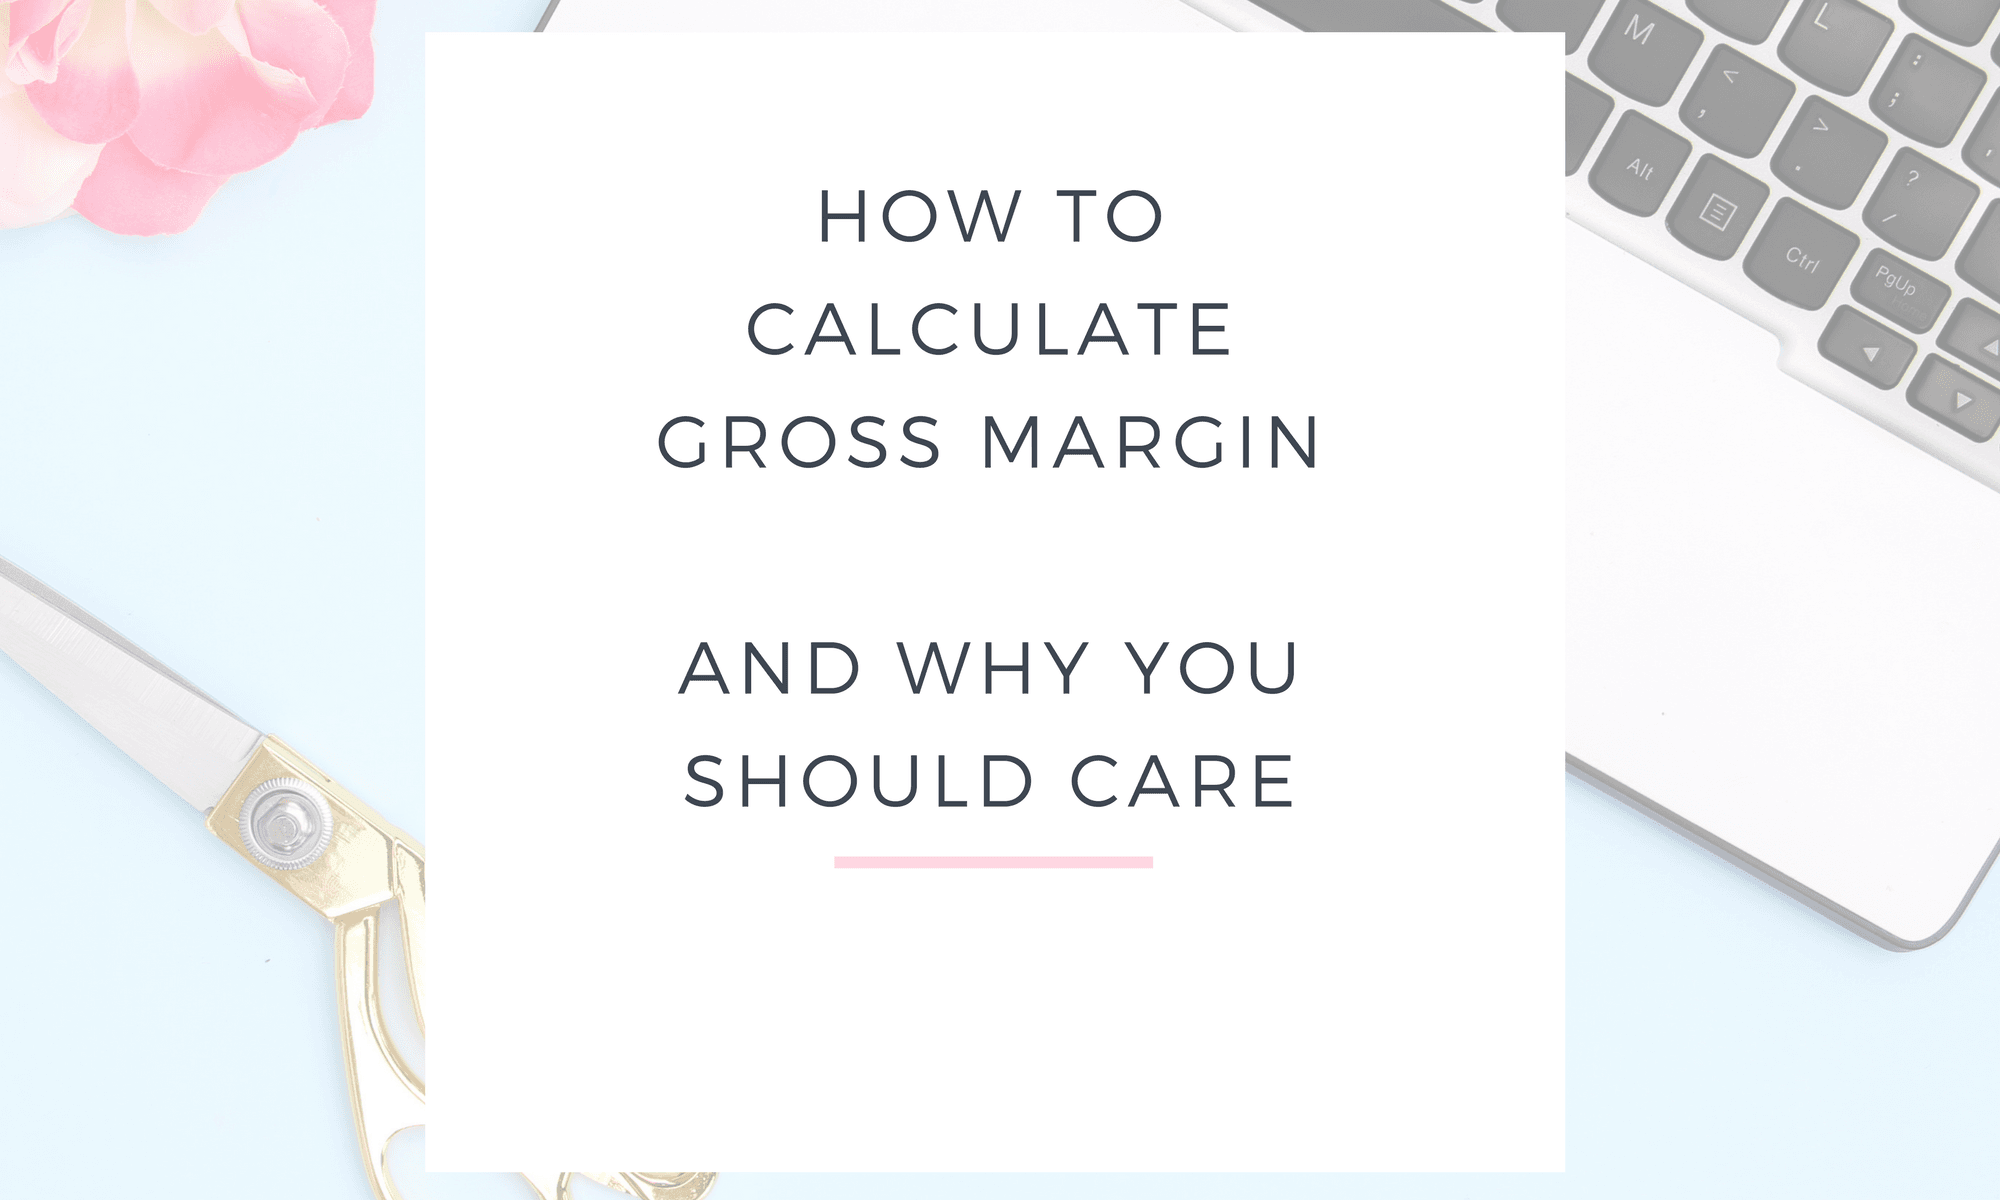 HOW TO CALCULATE GROSS MARGIN